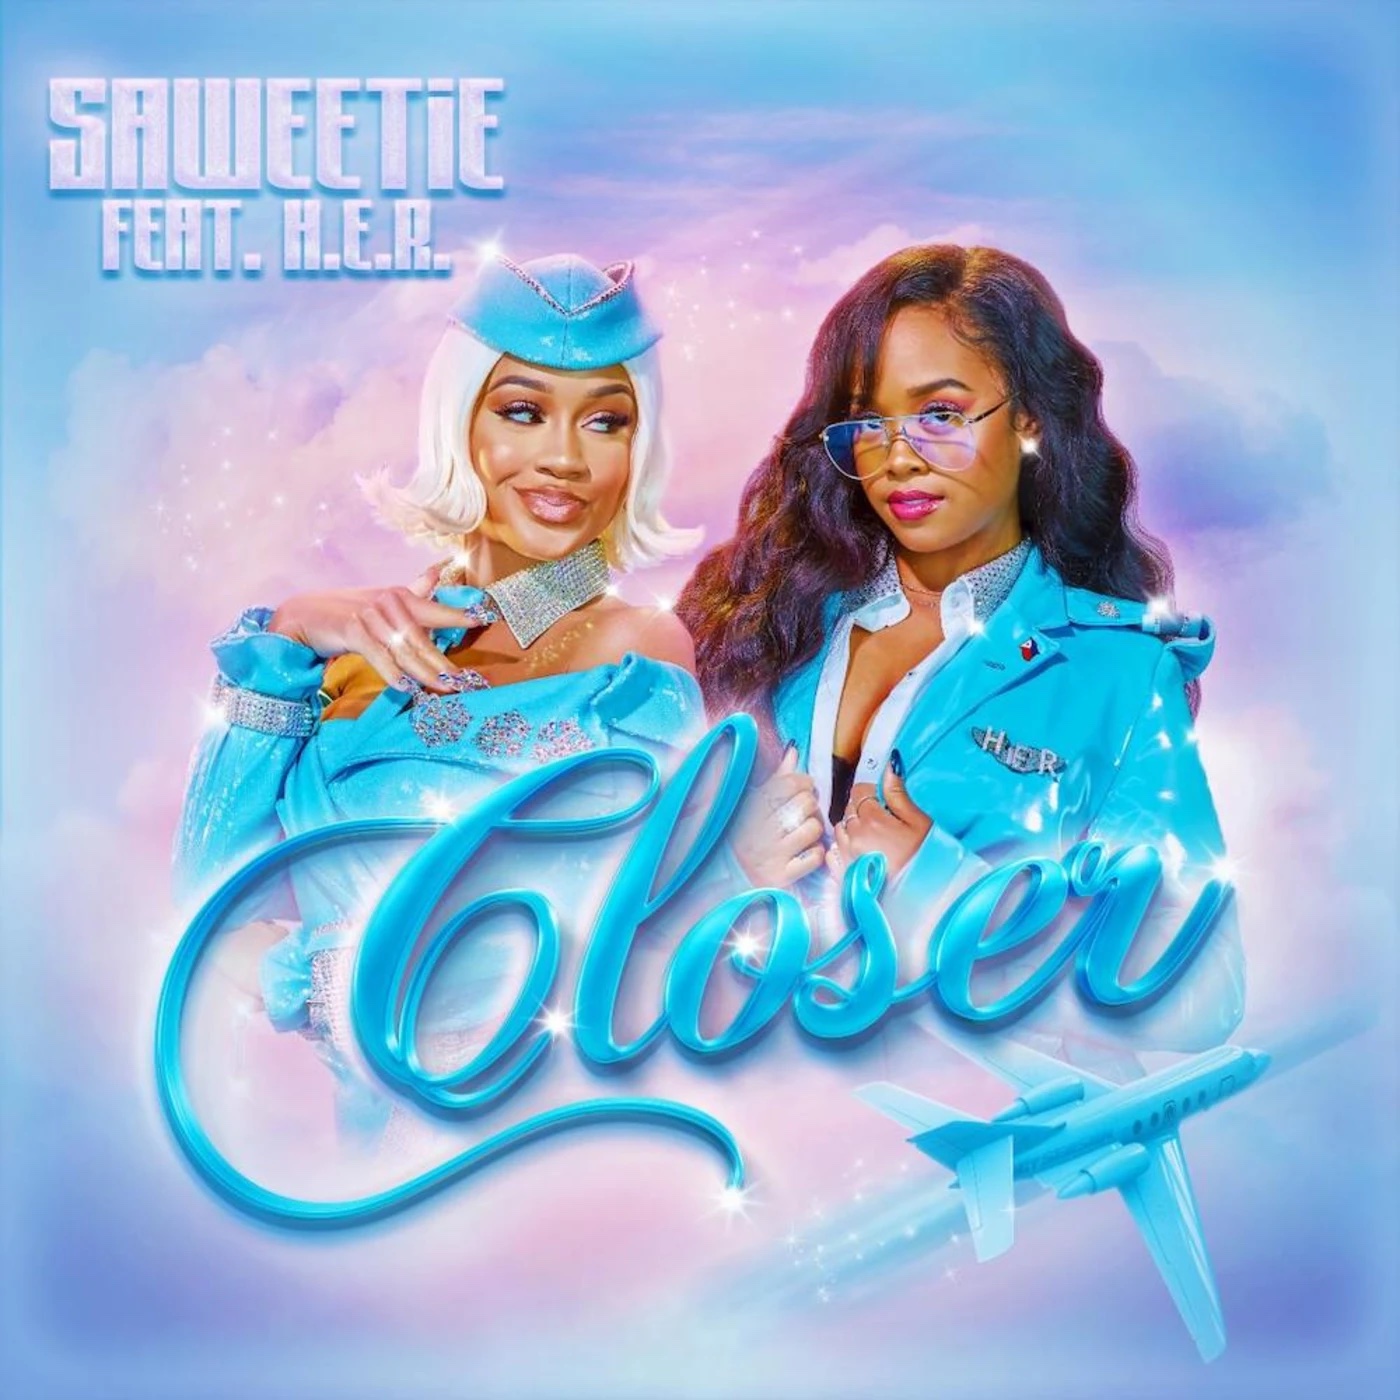 Saweetie featuring H.E.R. — Closer cover artwork